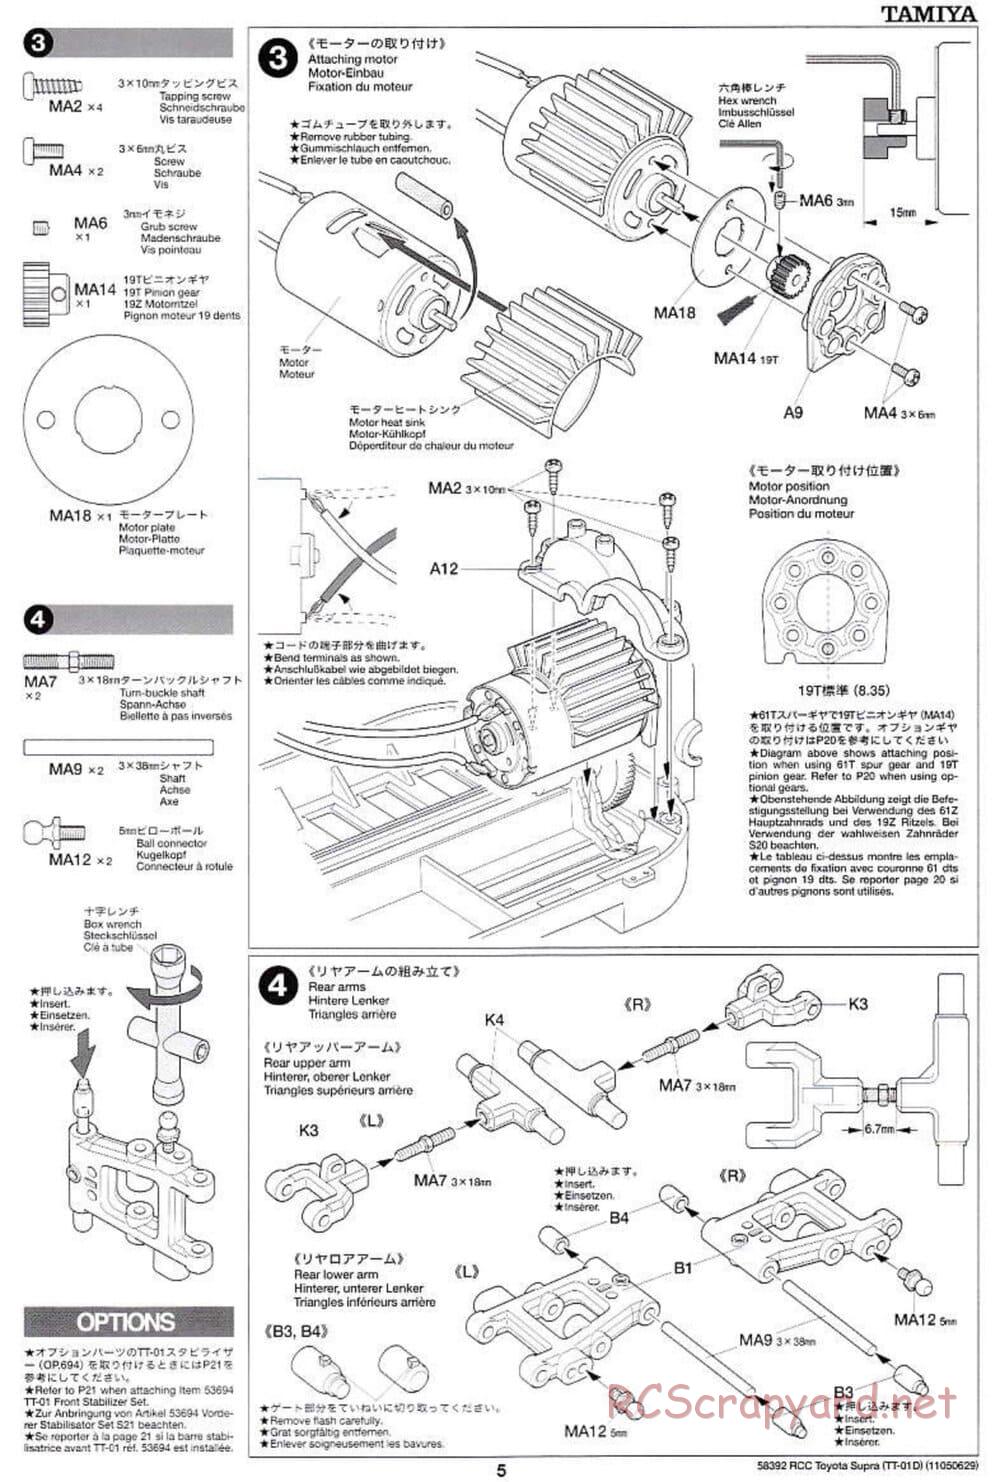 Tamiya - Toyota Supra - Drift Spec - TT-01D Chassis - Manual - Page 5